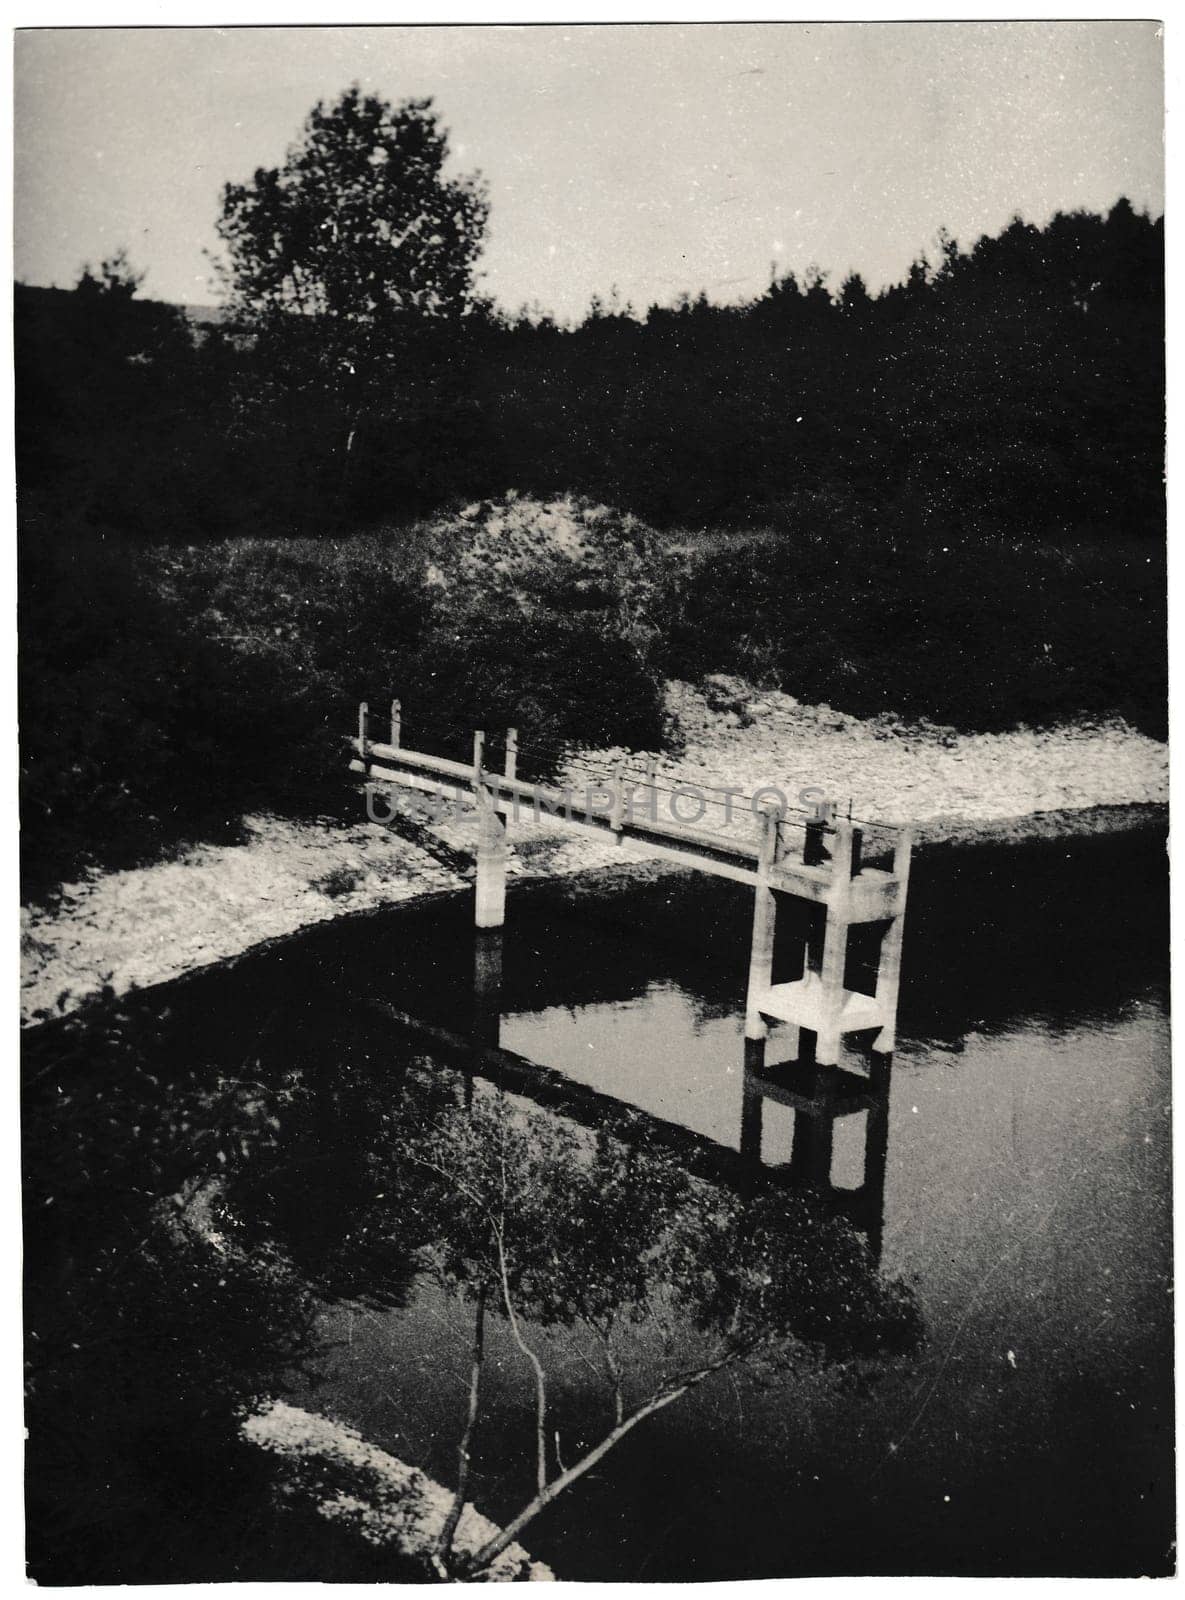 THE CZECHOSLOVAK SOCIALIST REPUBLIC - JUNE 3, 1957: Retro photo shows sluice gate in the pond. Black and white vintage photography.